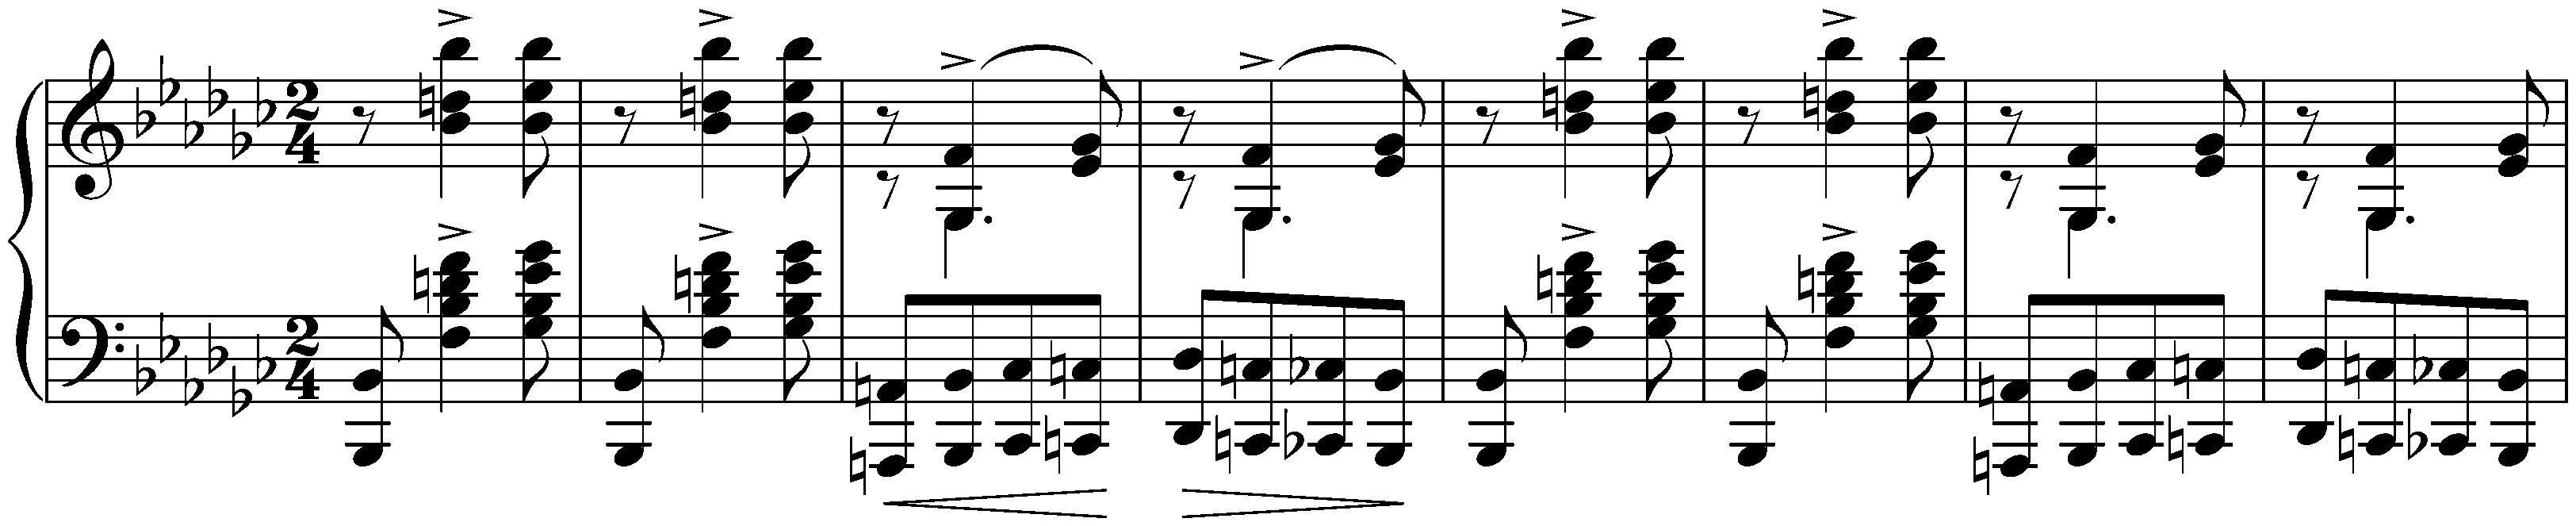 Sonata in E-flat minor, WoO 19; 3.